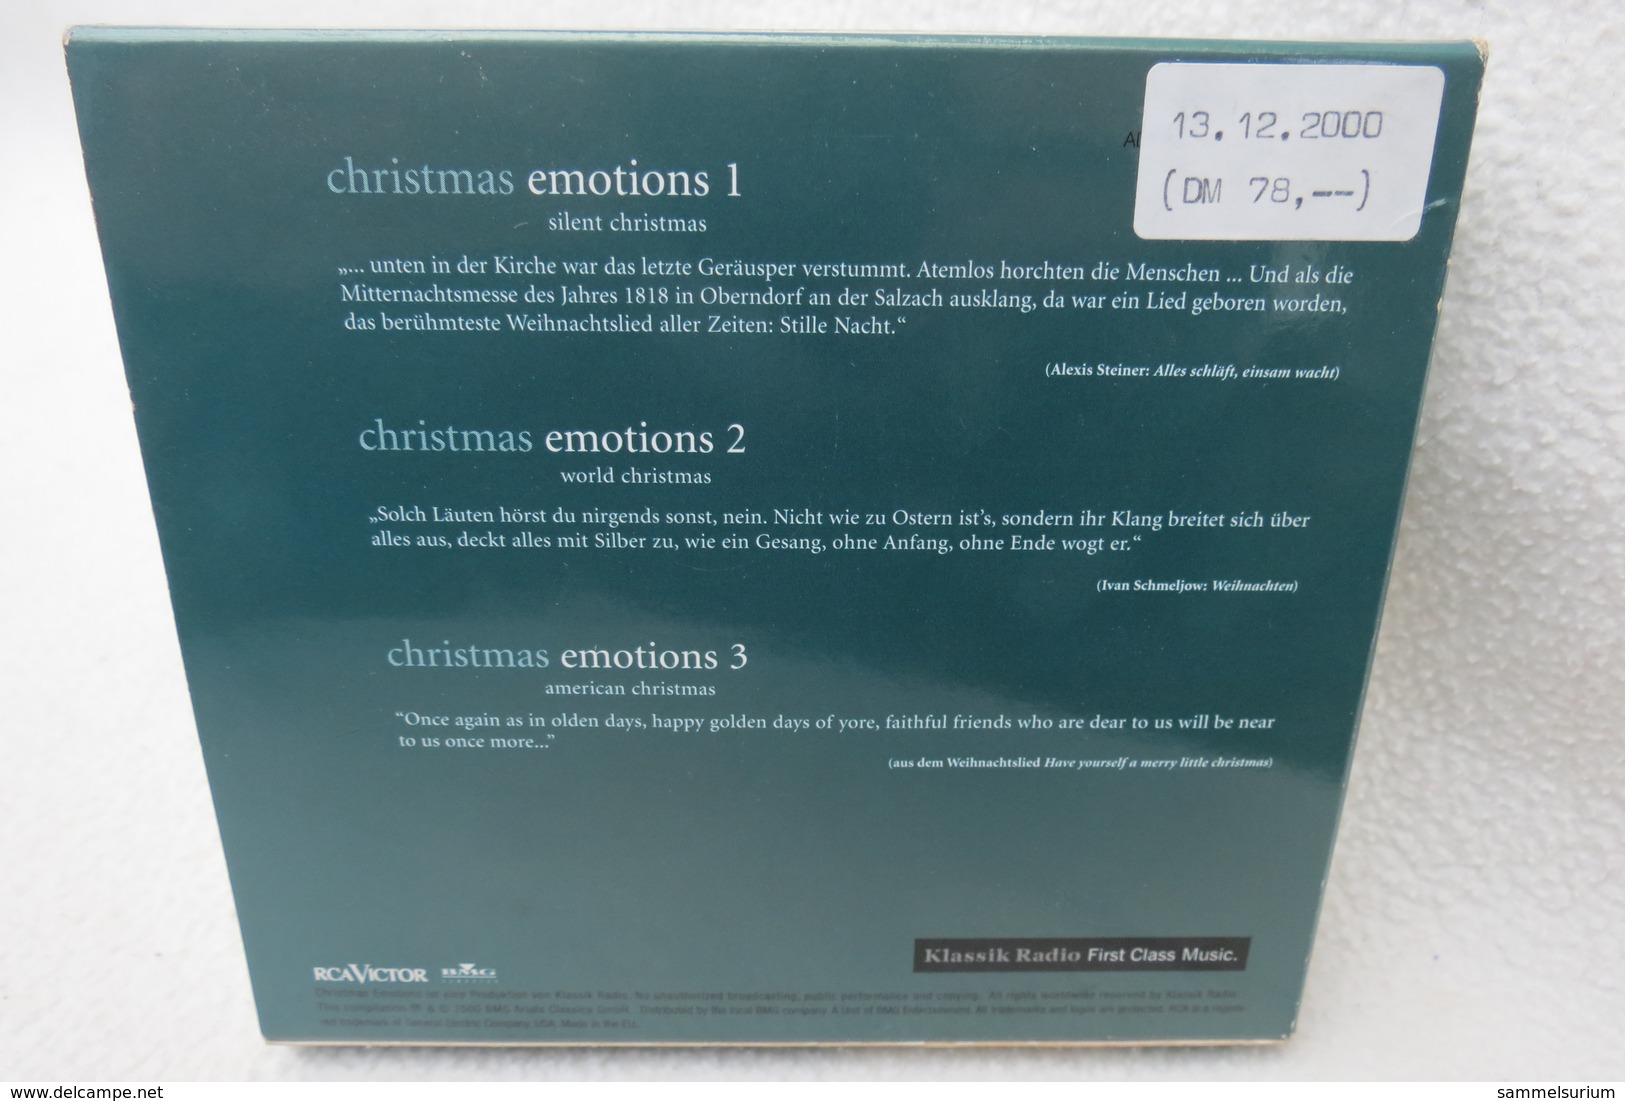 3 CD-Set "Christmas Emotions" First Class Music By Klassik Radio - Chants De Noel